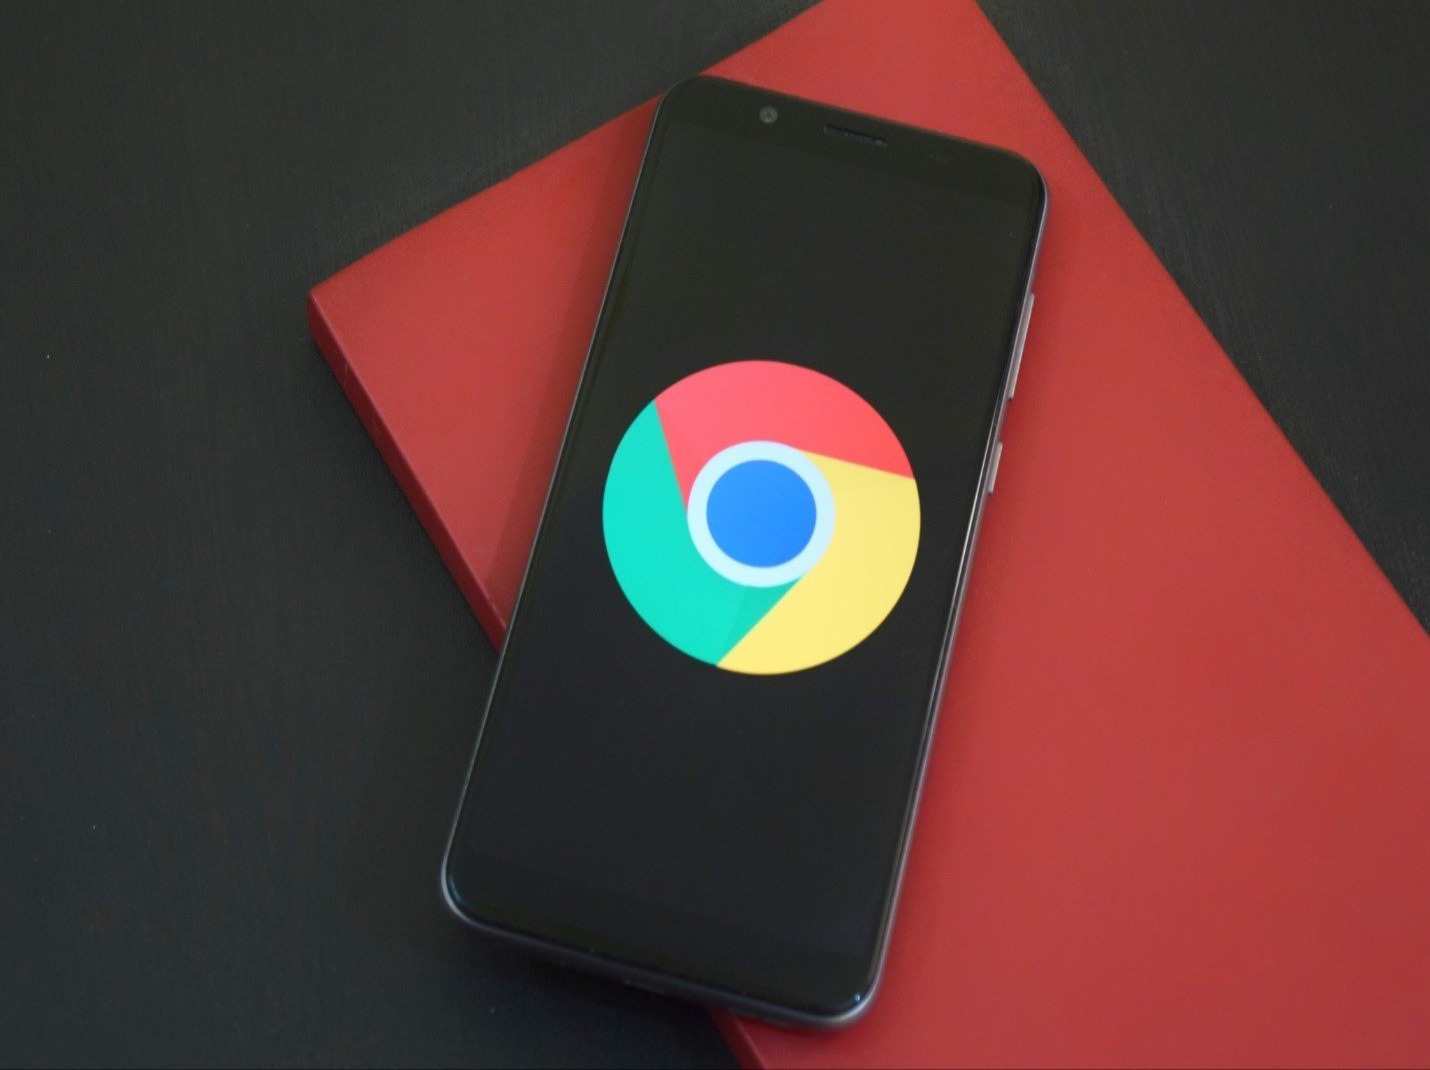 Smartphone with Google logo on display